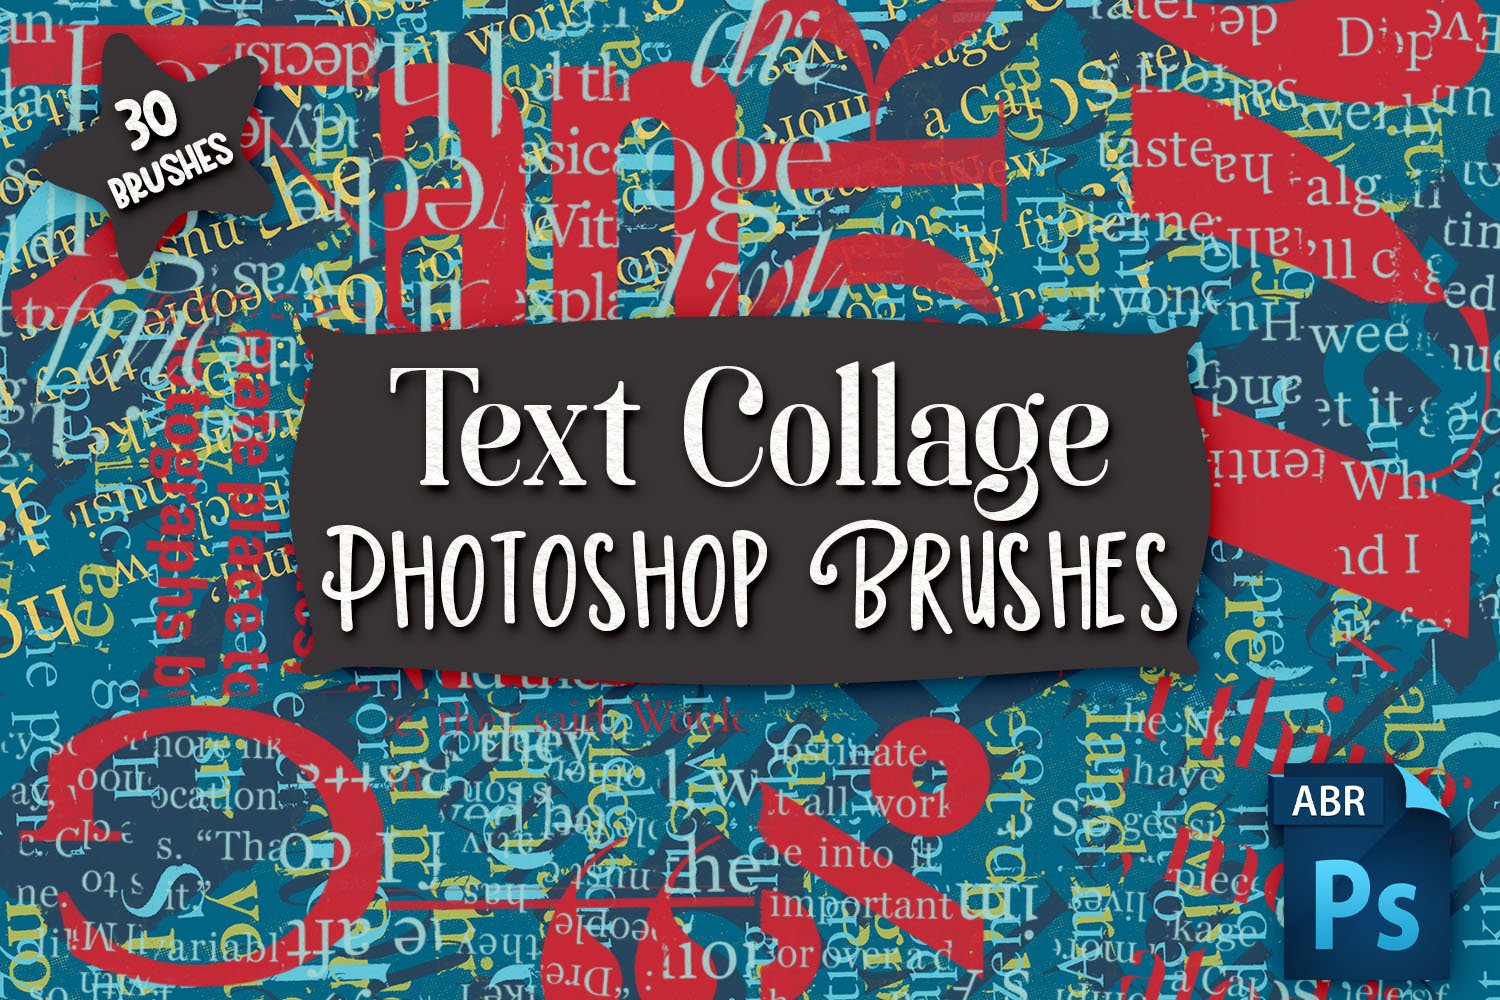 Text Collage Photoshop Brushescover image.